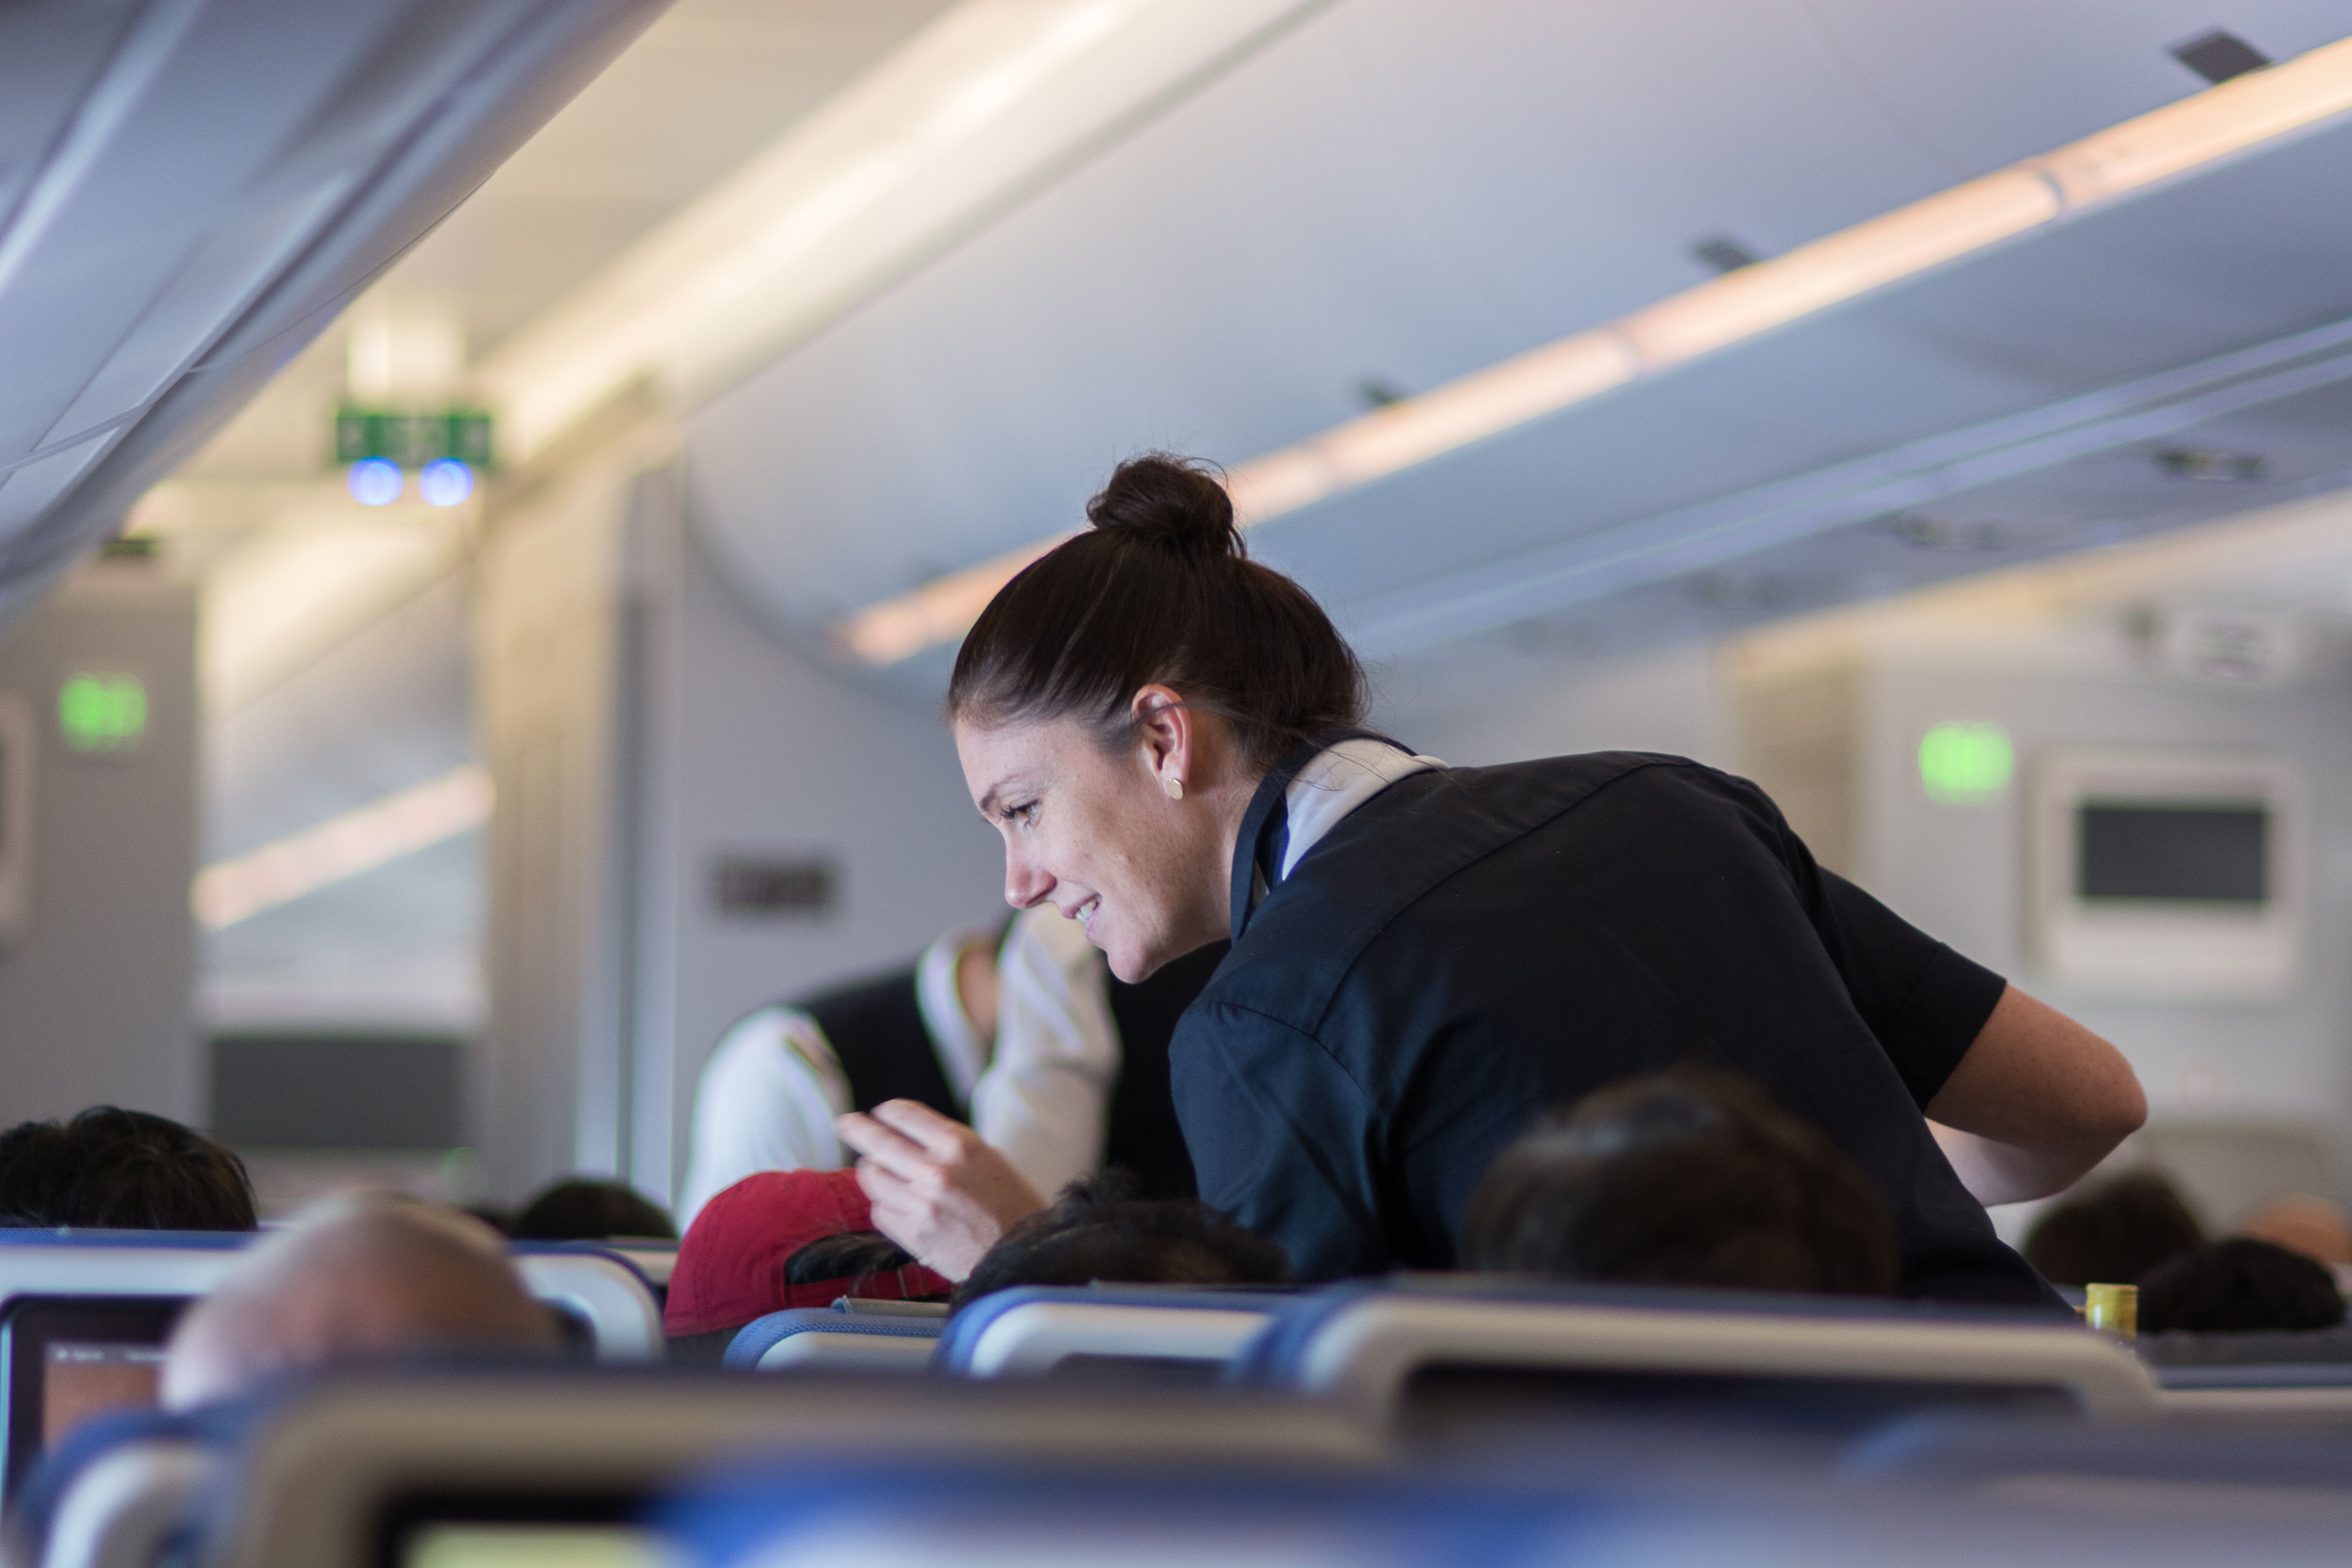 A flight attendant talking with a passenger.